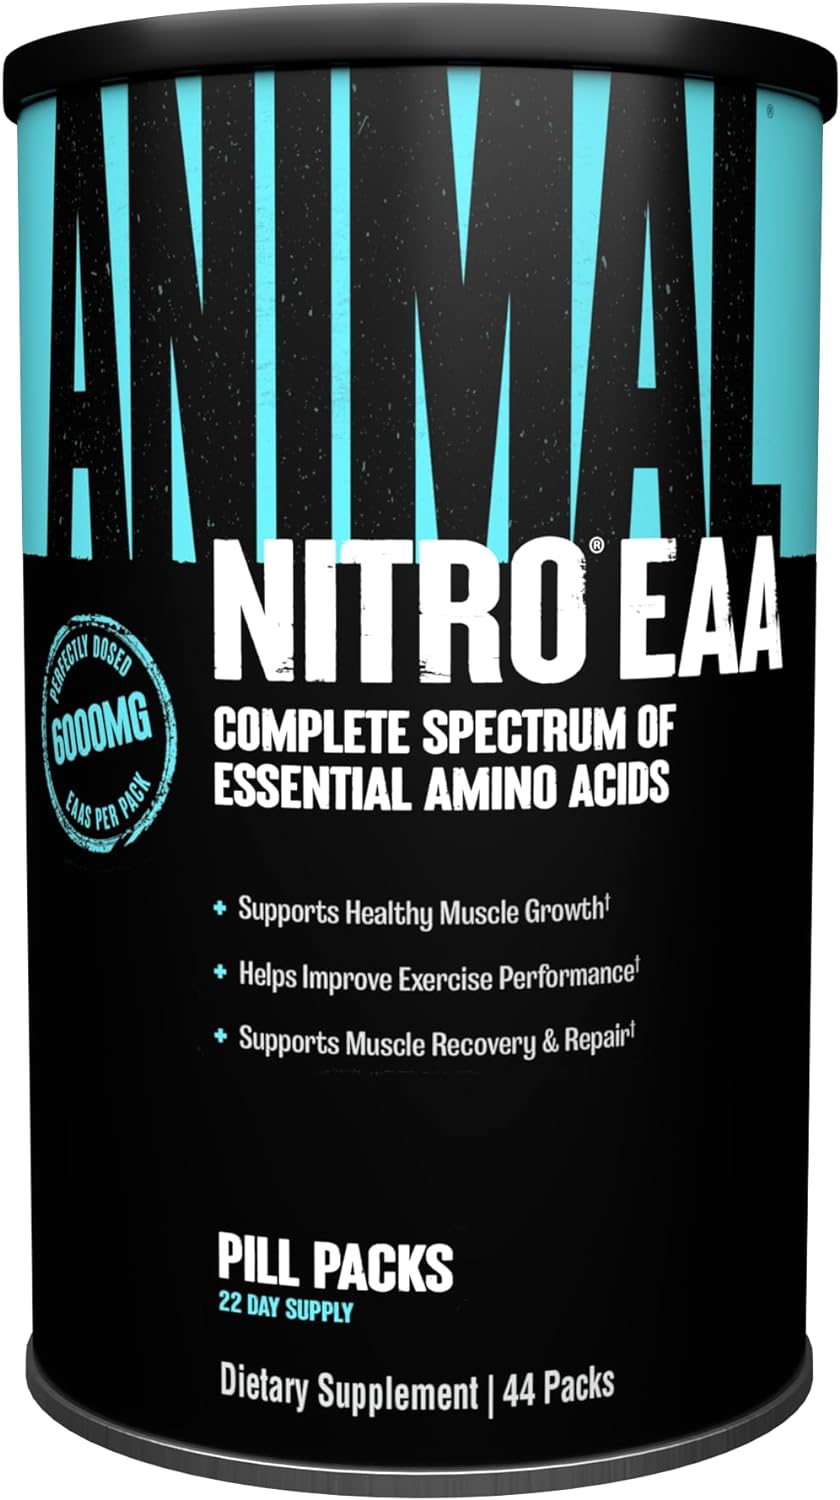 Universal Nutrition Animal Nitro